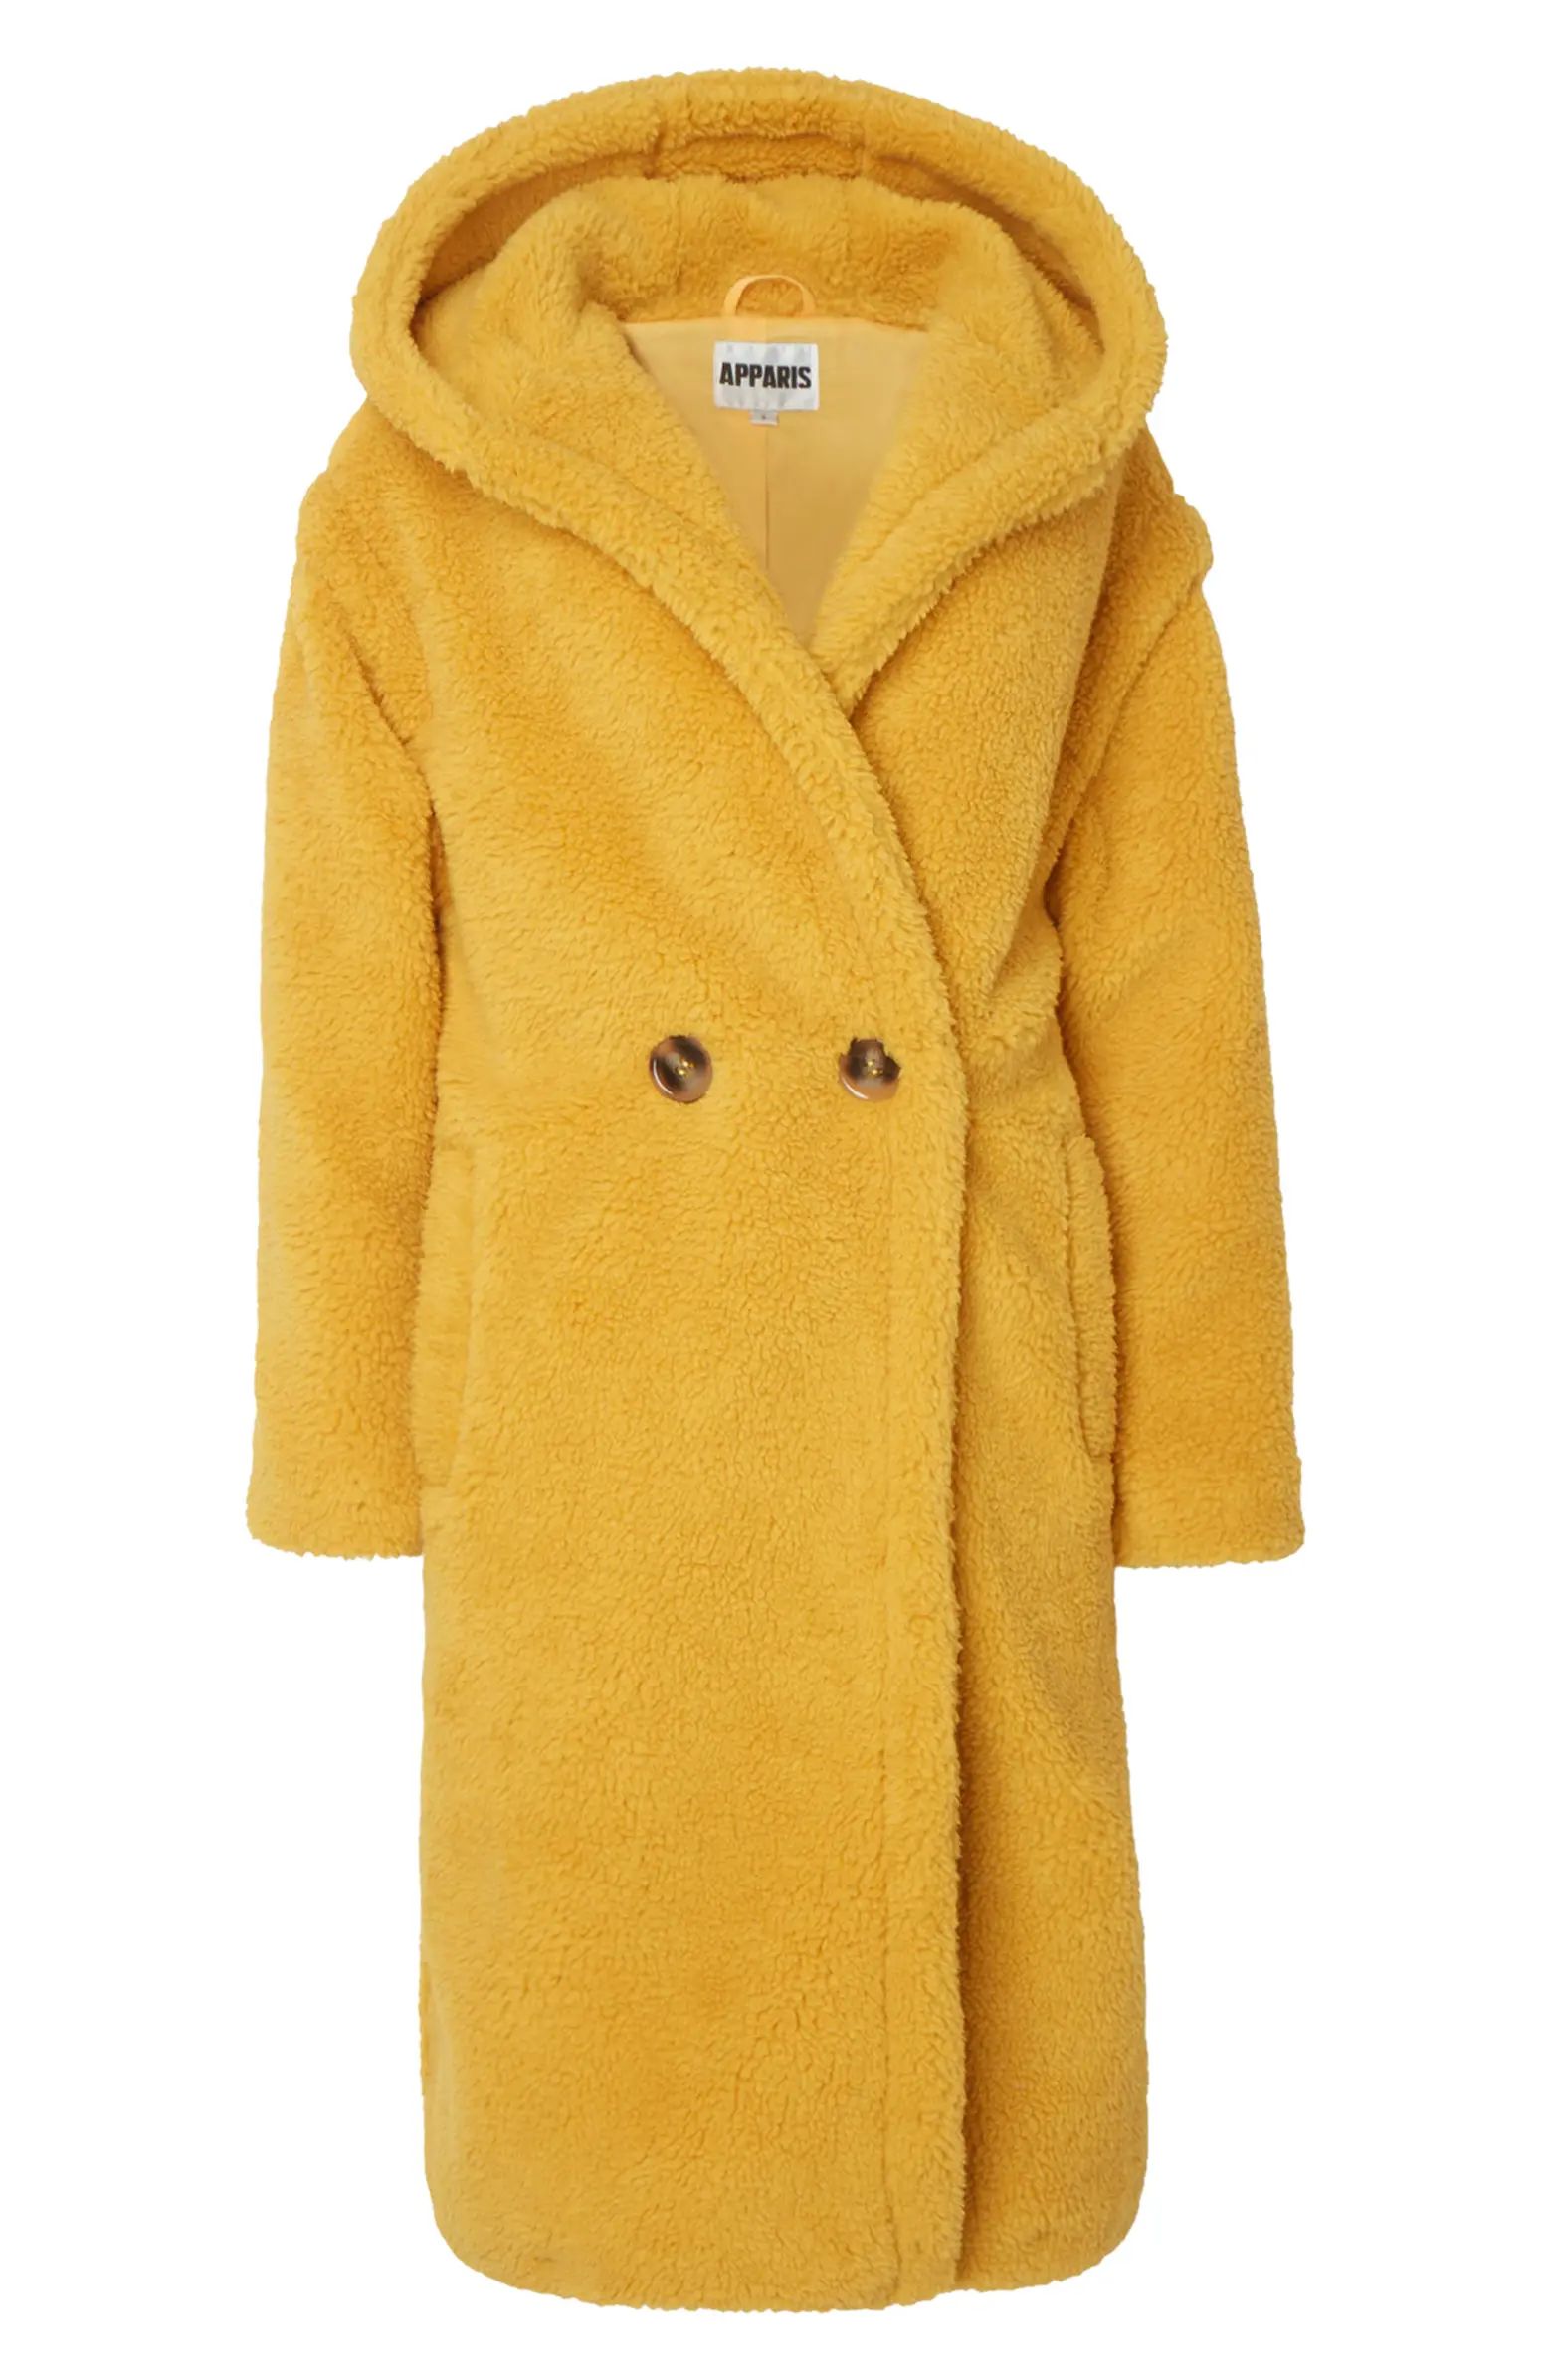 Apparis Mia Faux Fur Hooded Teddy Coat | Nordstrom | Nordstrom